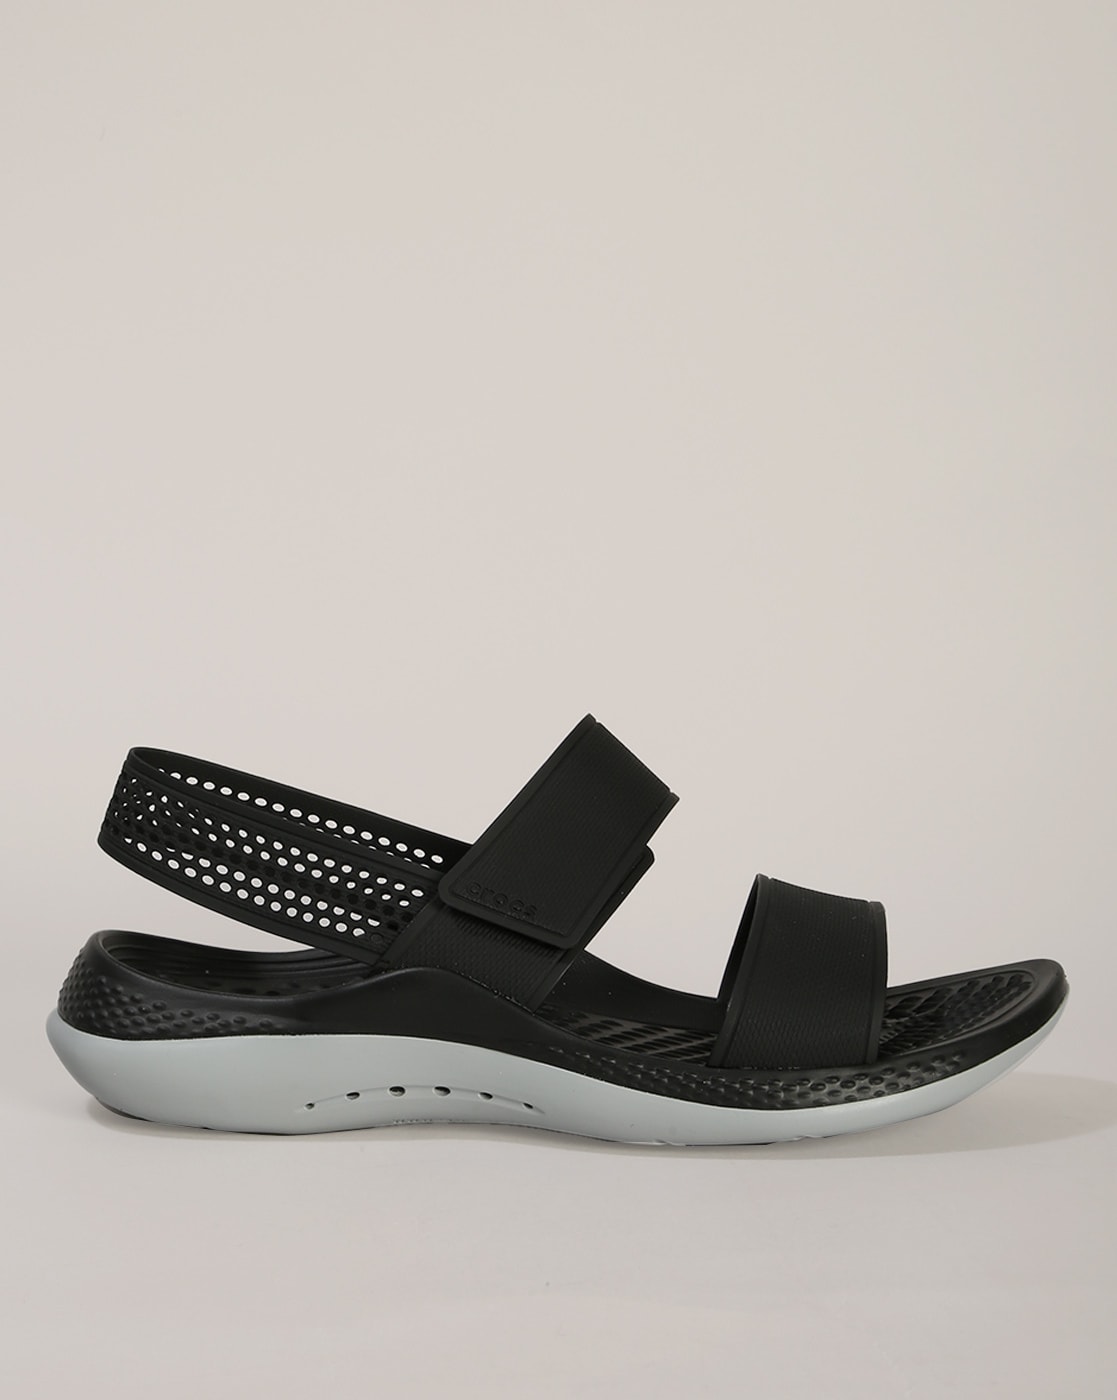 Crocs Sandals : Buy Crocs Literide White Women Sandal Online | Nykaa Fashion